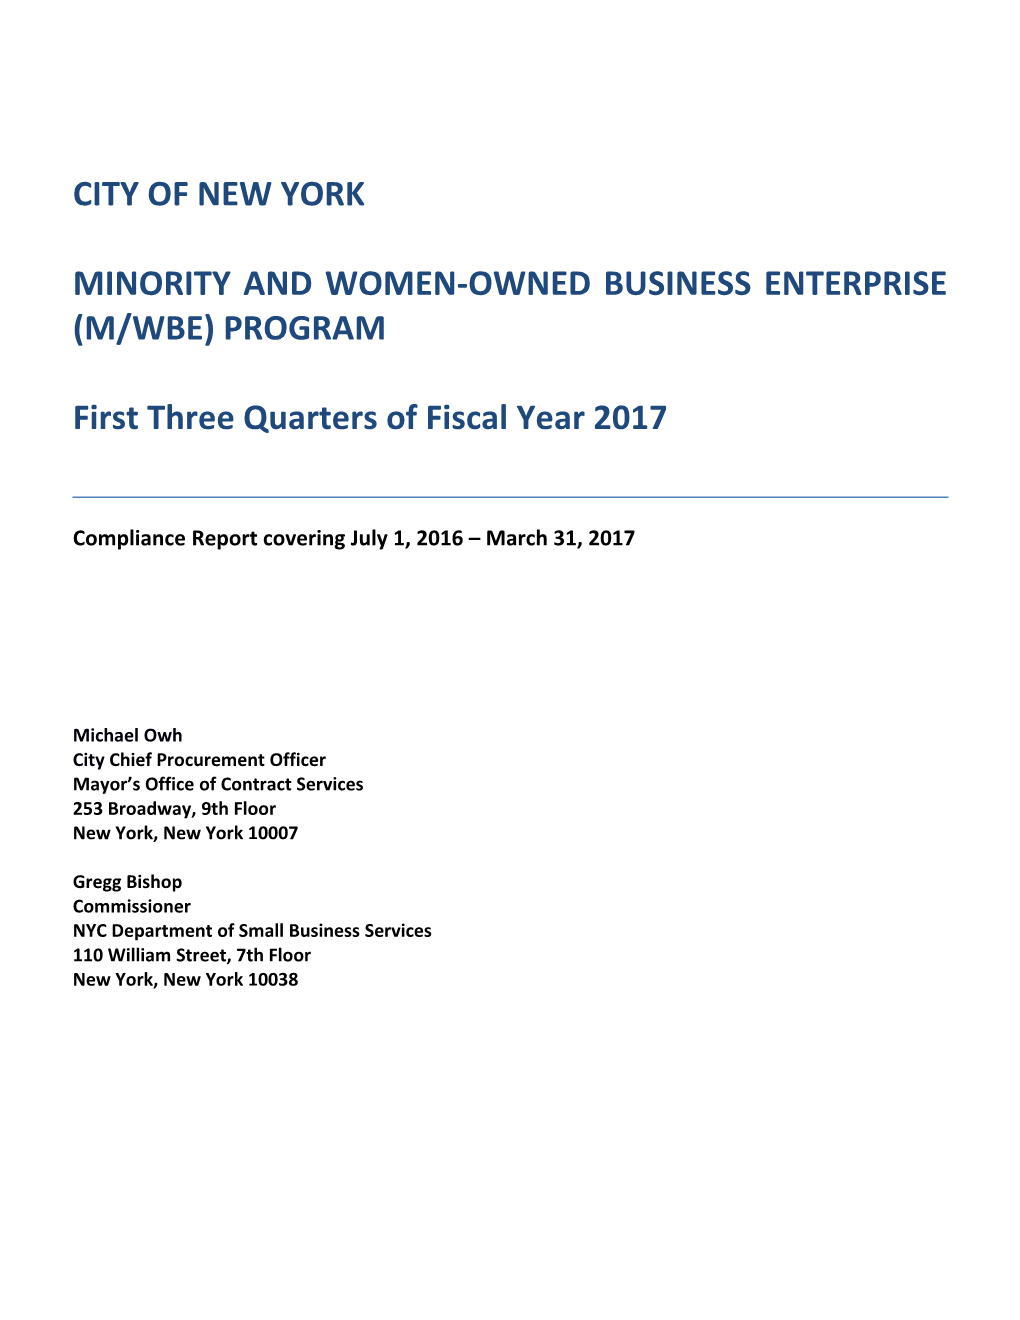 Minority and Women-Owned Business Enterprise (M/WBE) Program